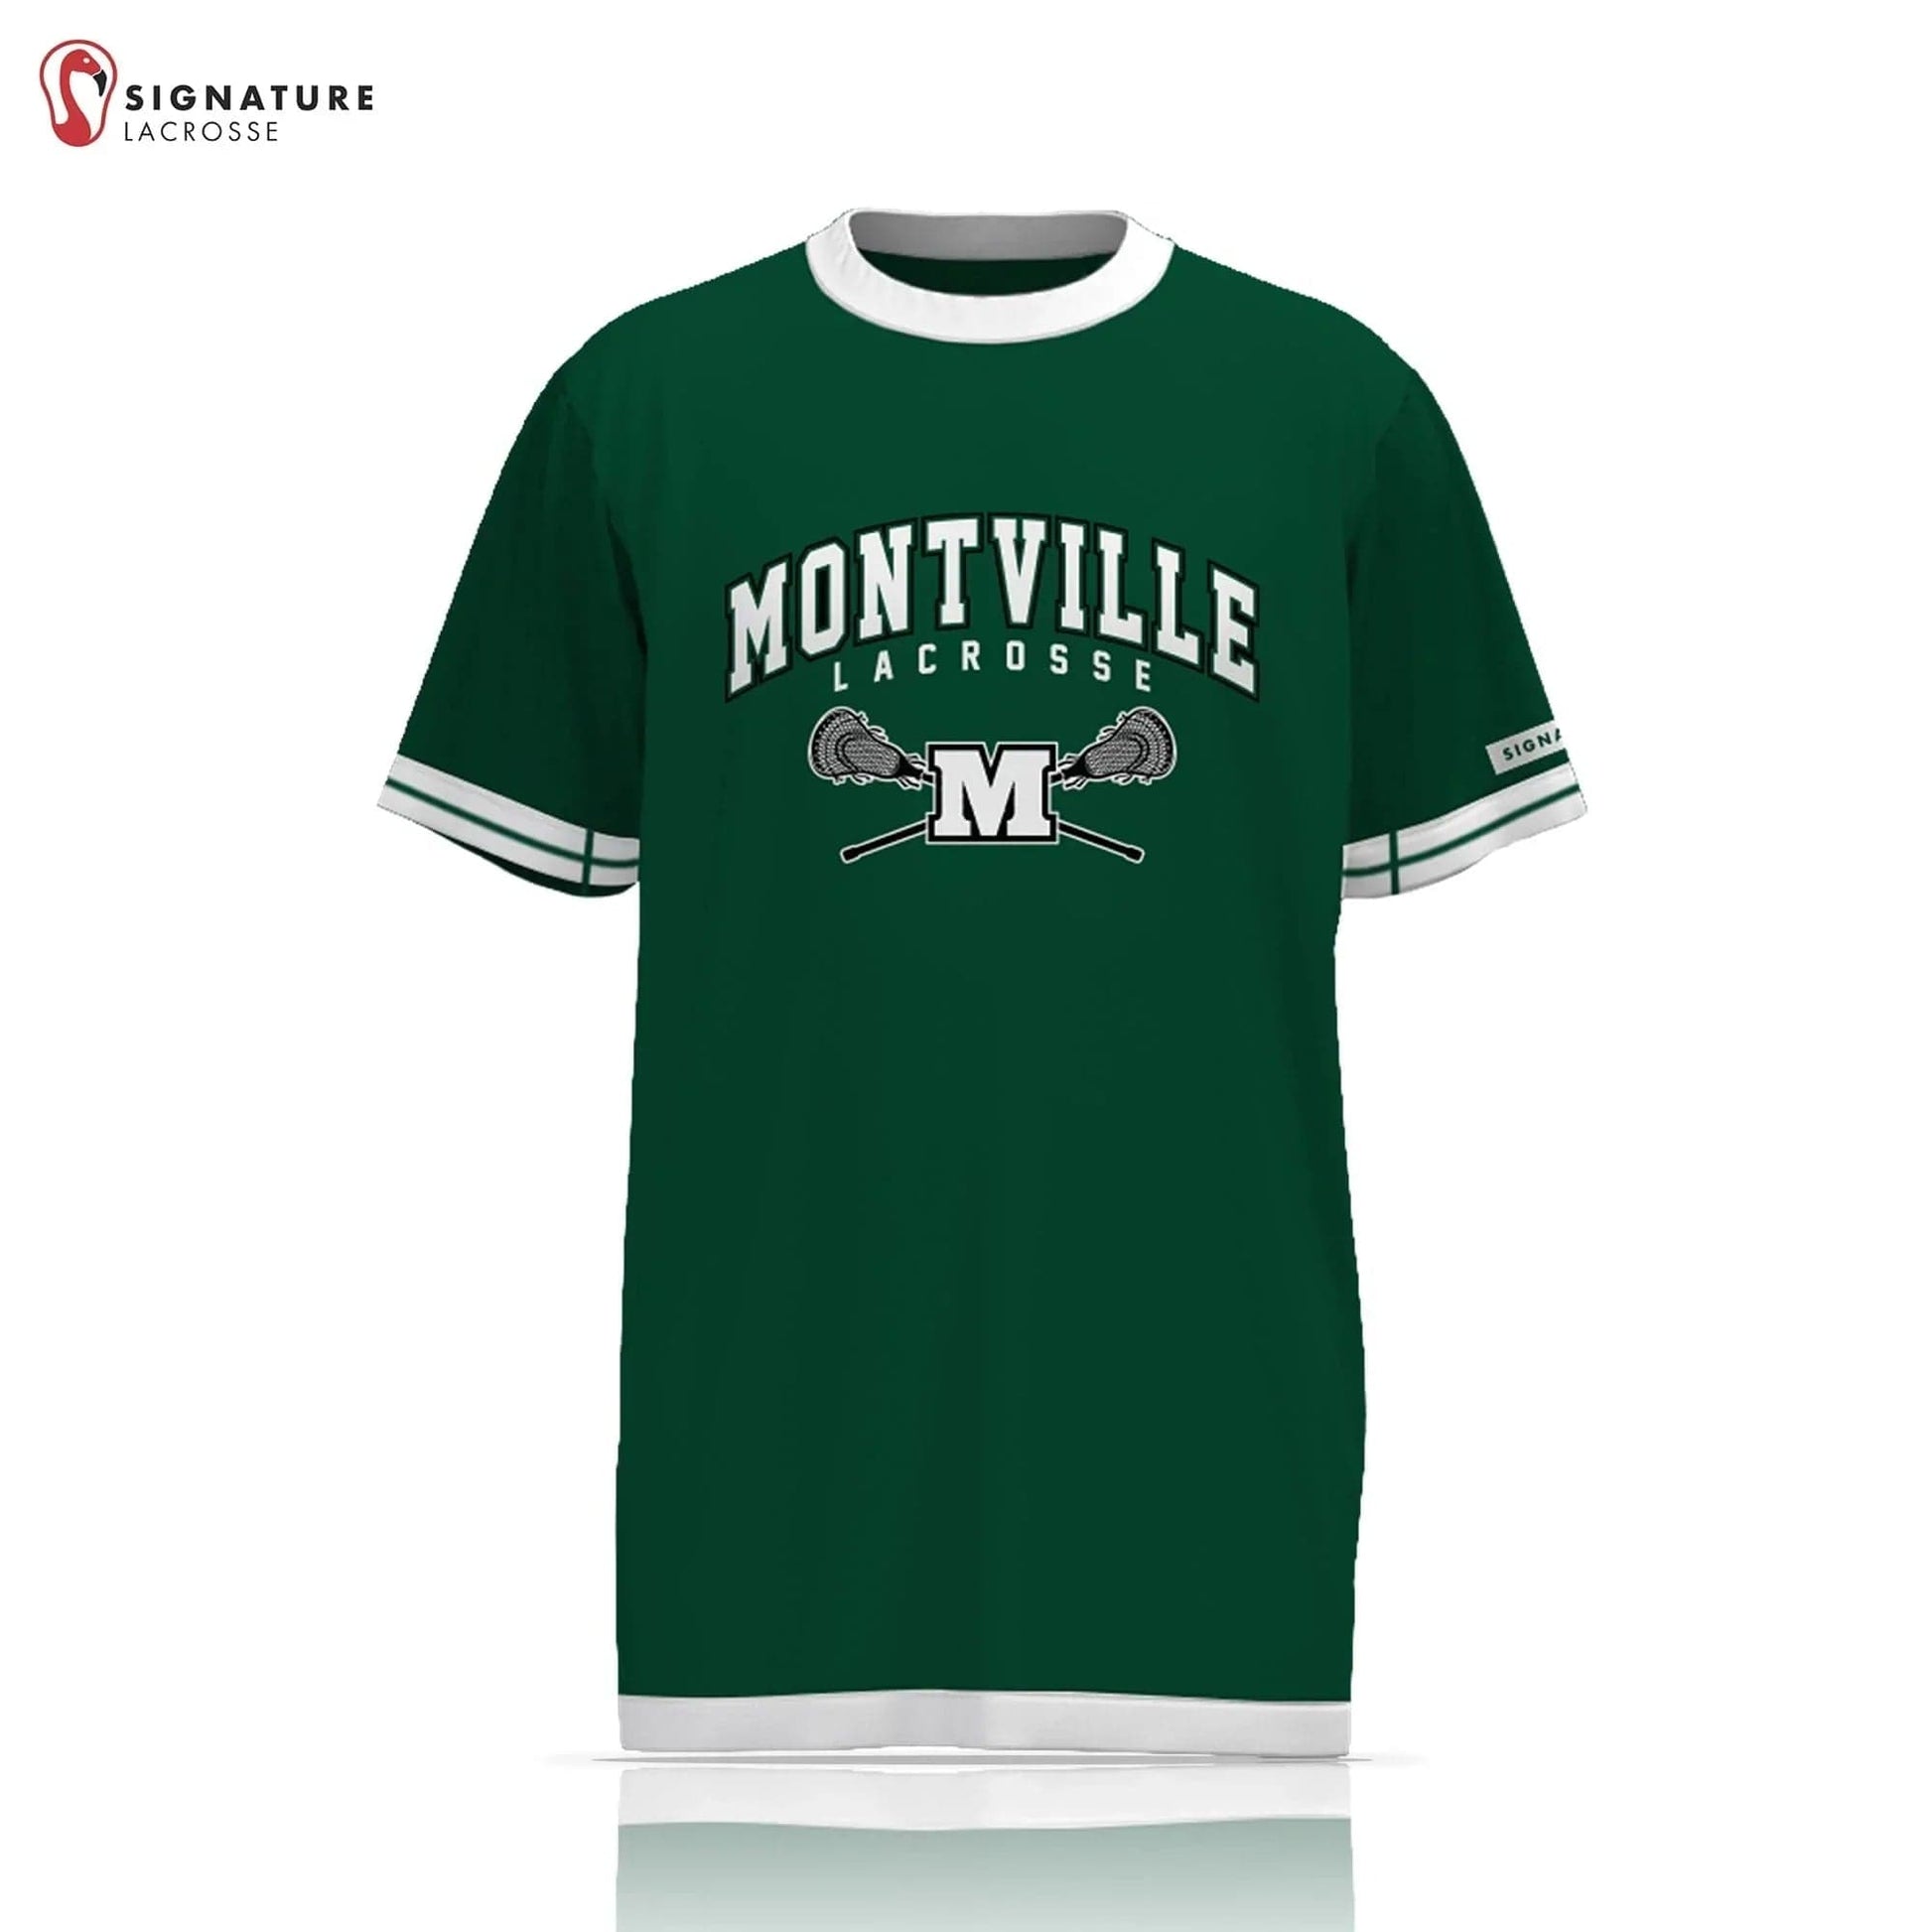 Montville Lacrosse Men's Game Short Sleeve Shooter Shirt: 6th Grade Signature Lacrosse